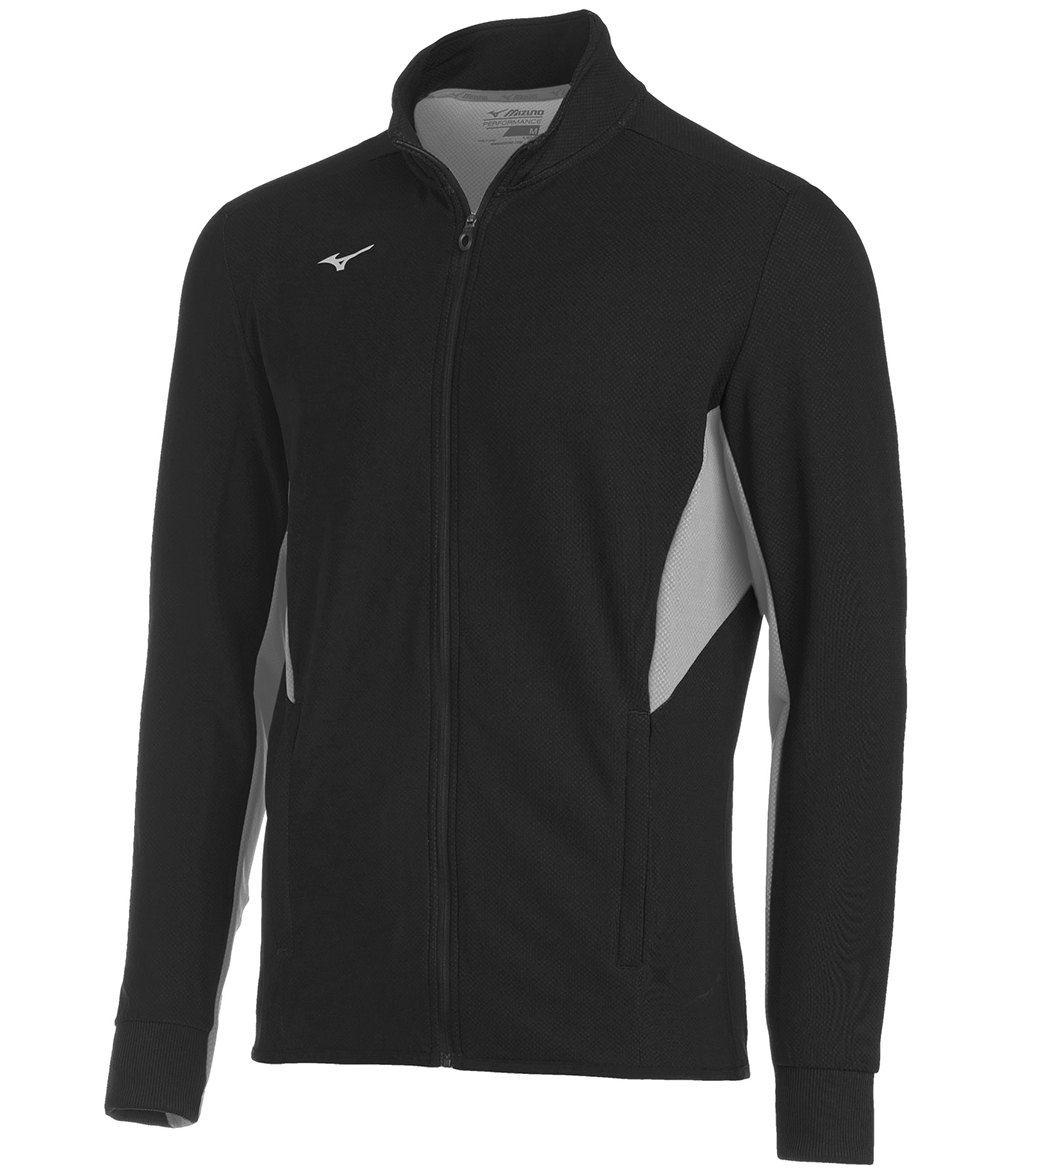 Mizuno Men's Elite Training Jacket - Black-Grey Medium Black/Grey Cotton/Polyester - Swimoutlet.com